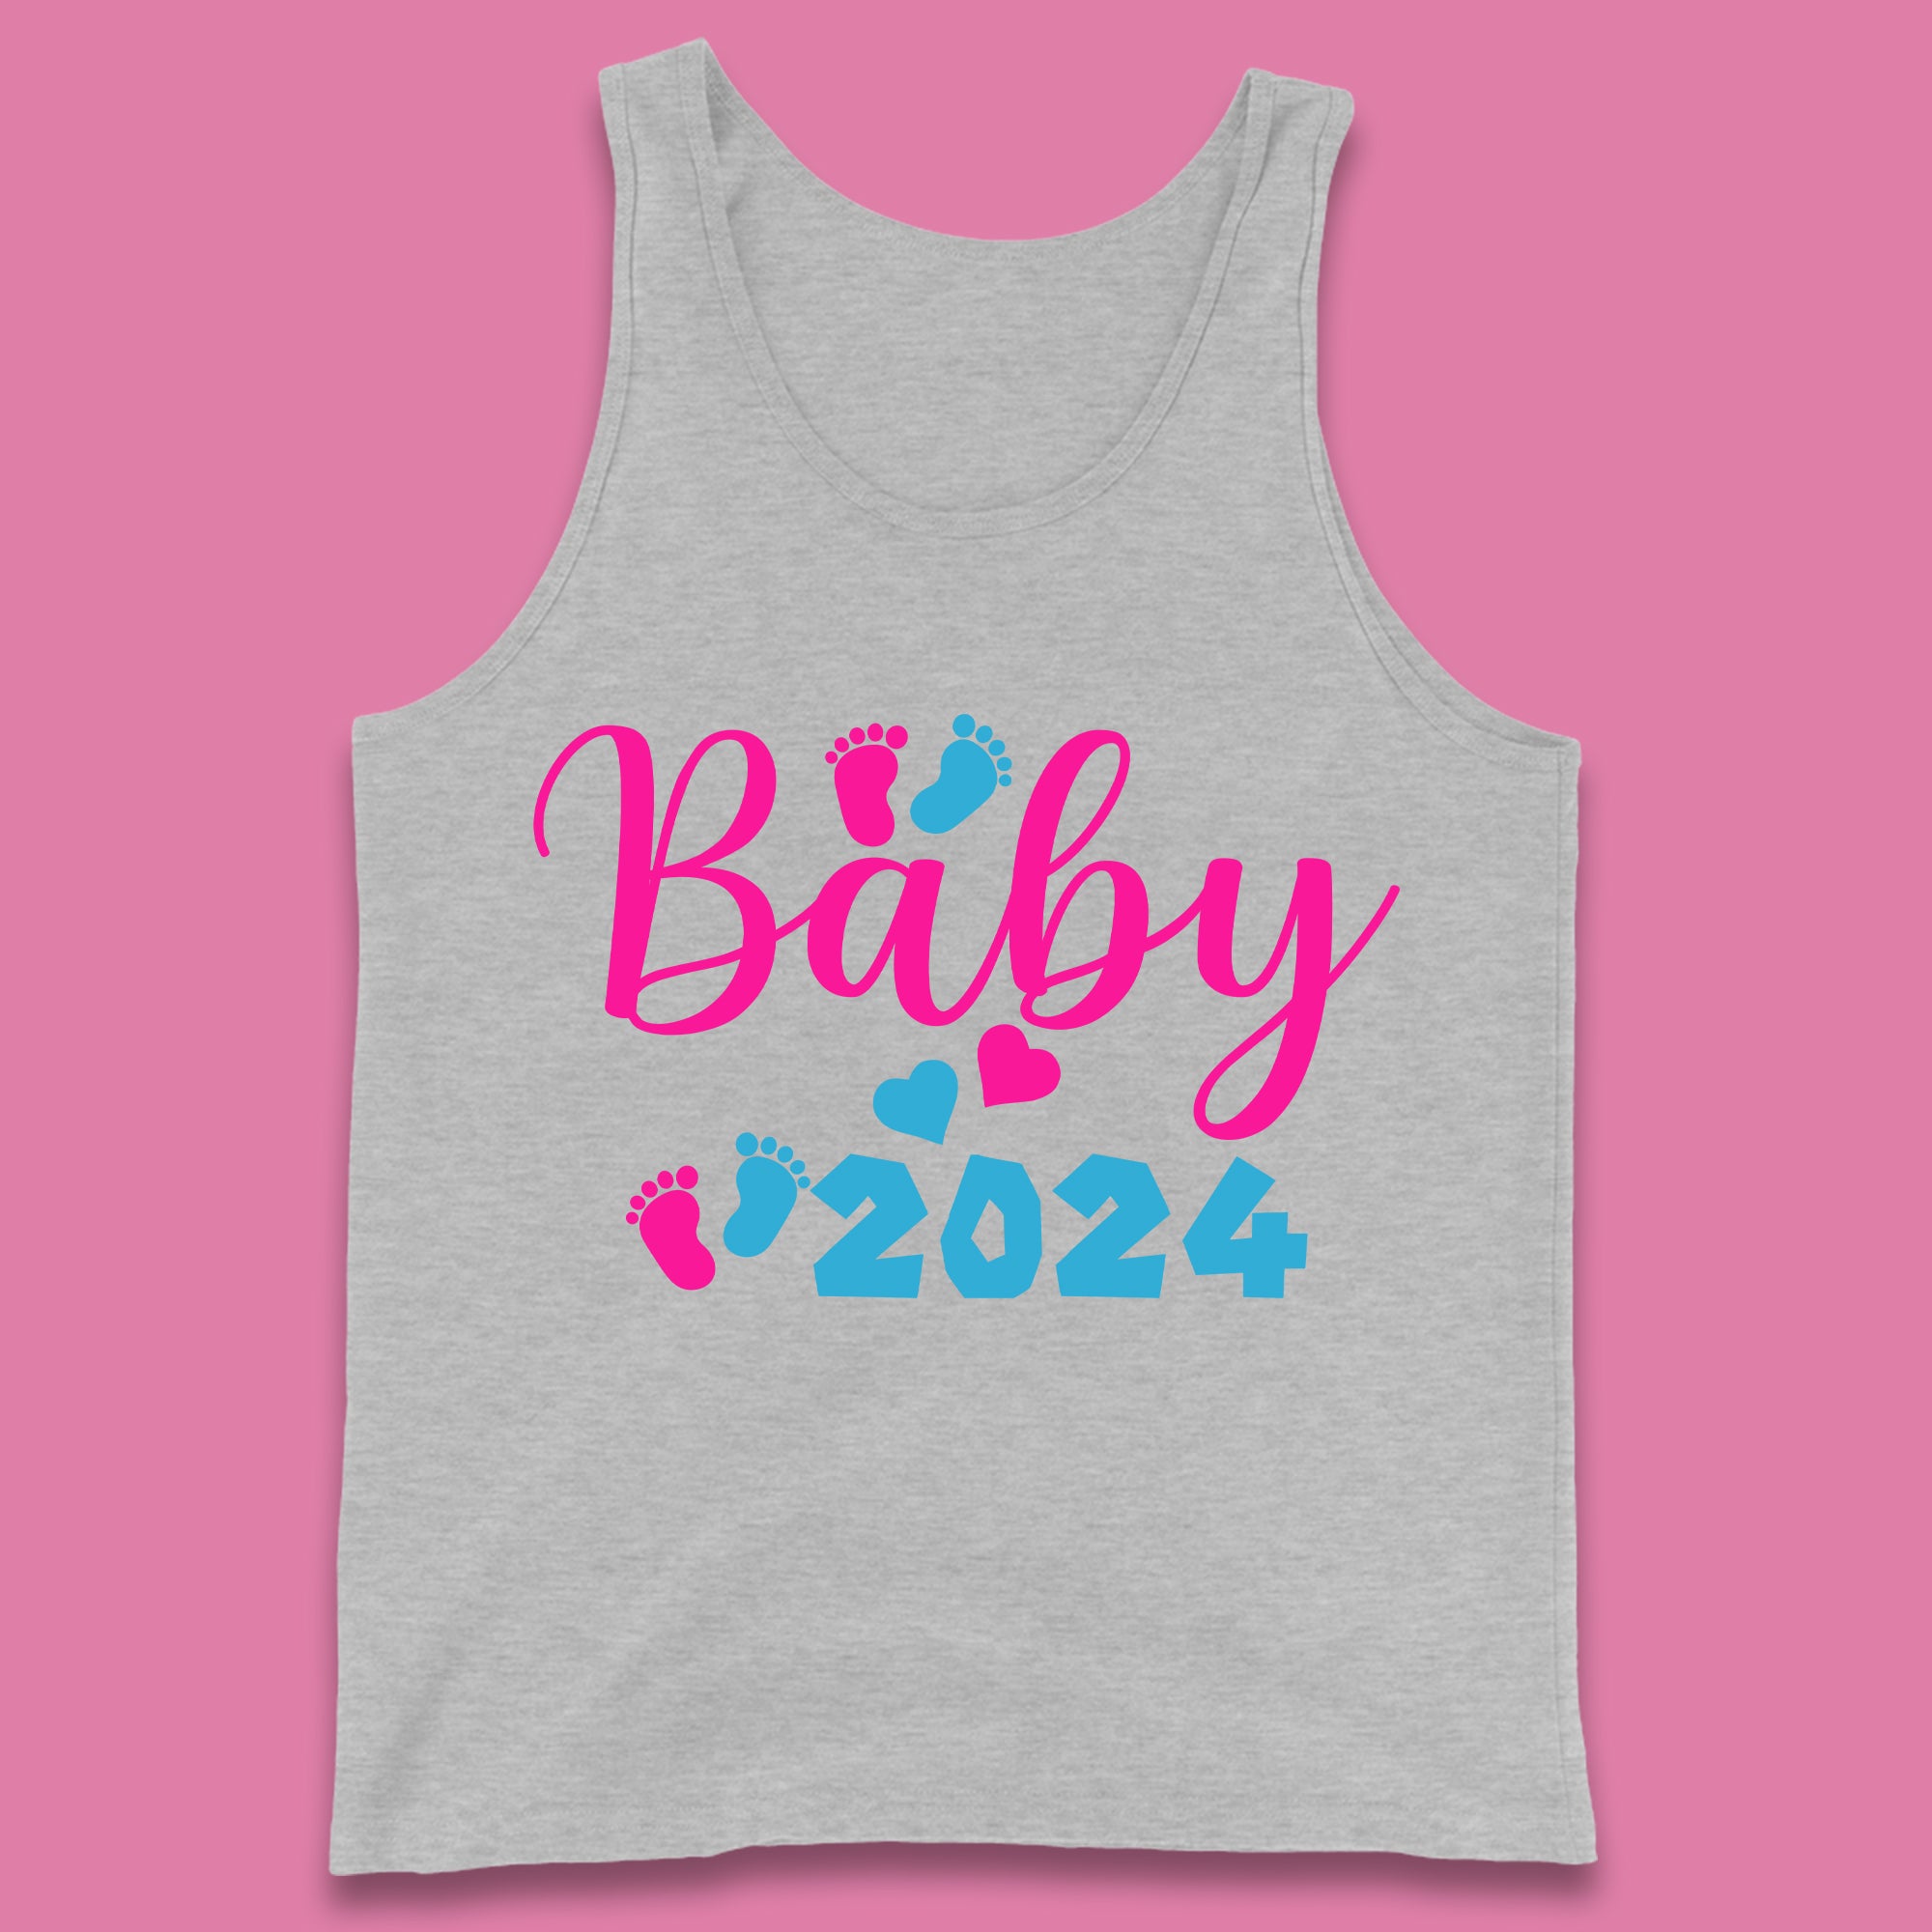 Baby 2024 Pregnancy Announcement Tank Top